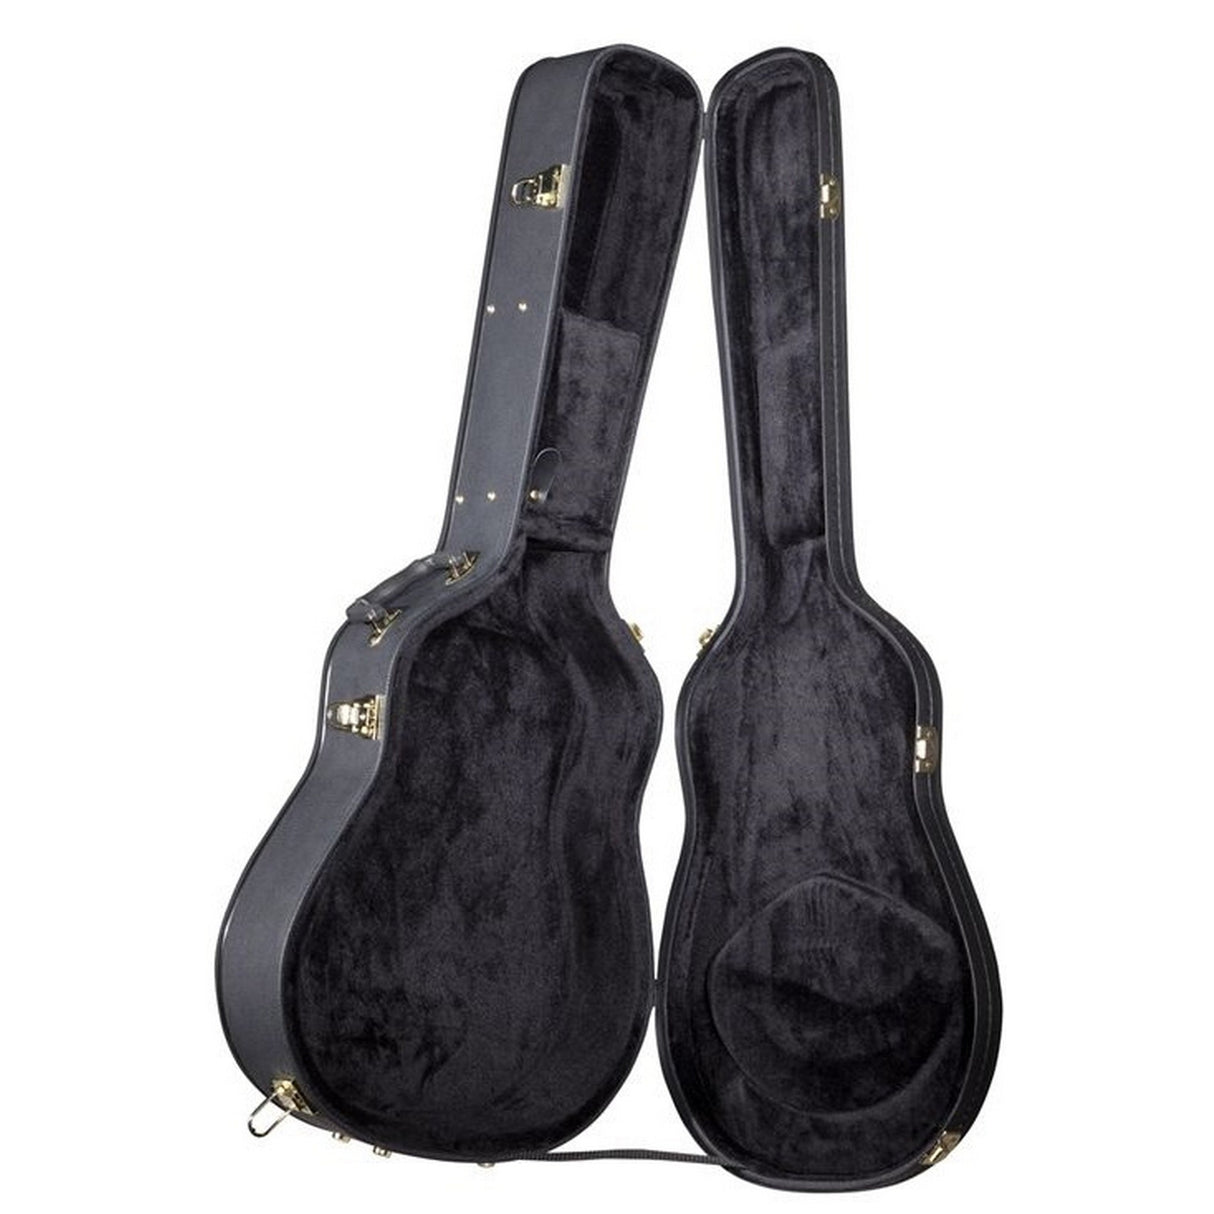 Yamaha AG2-HC Hardshell Case for APX and NTX Guitars